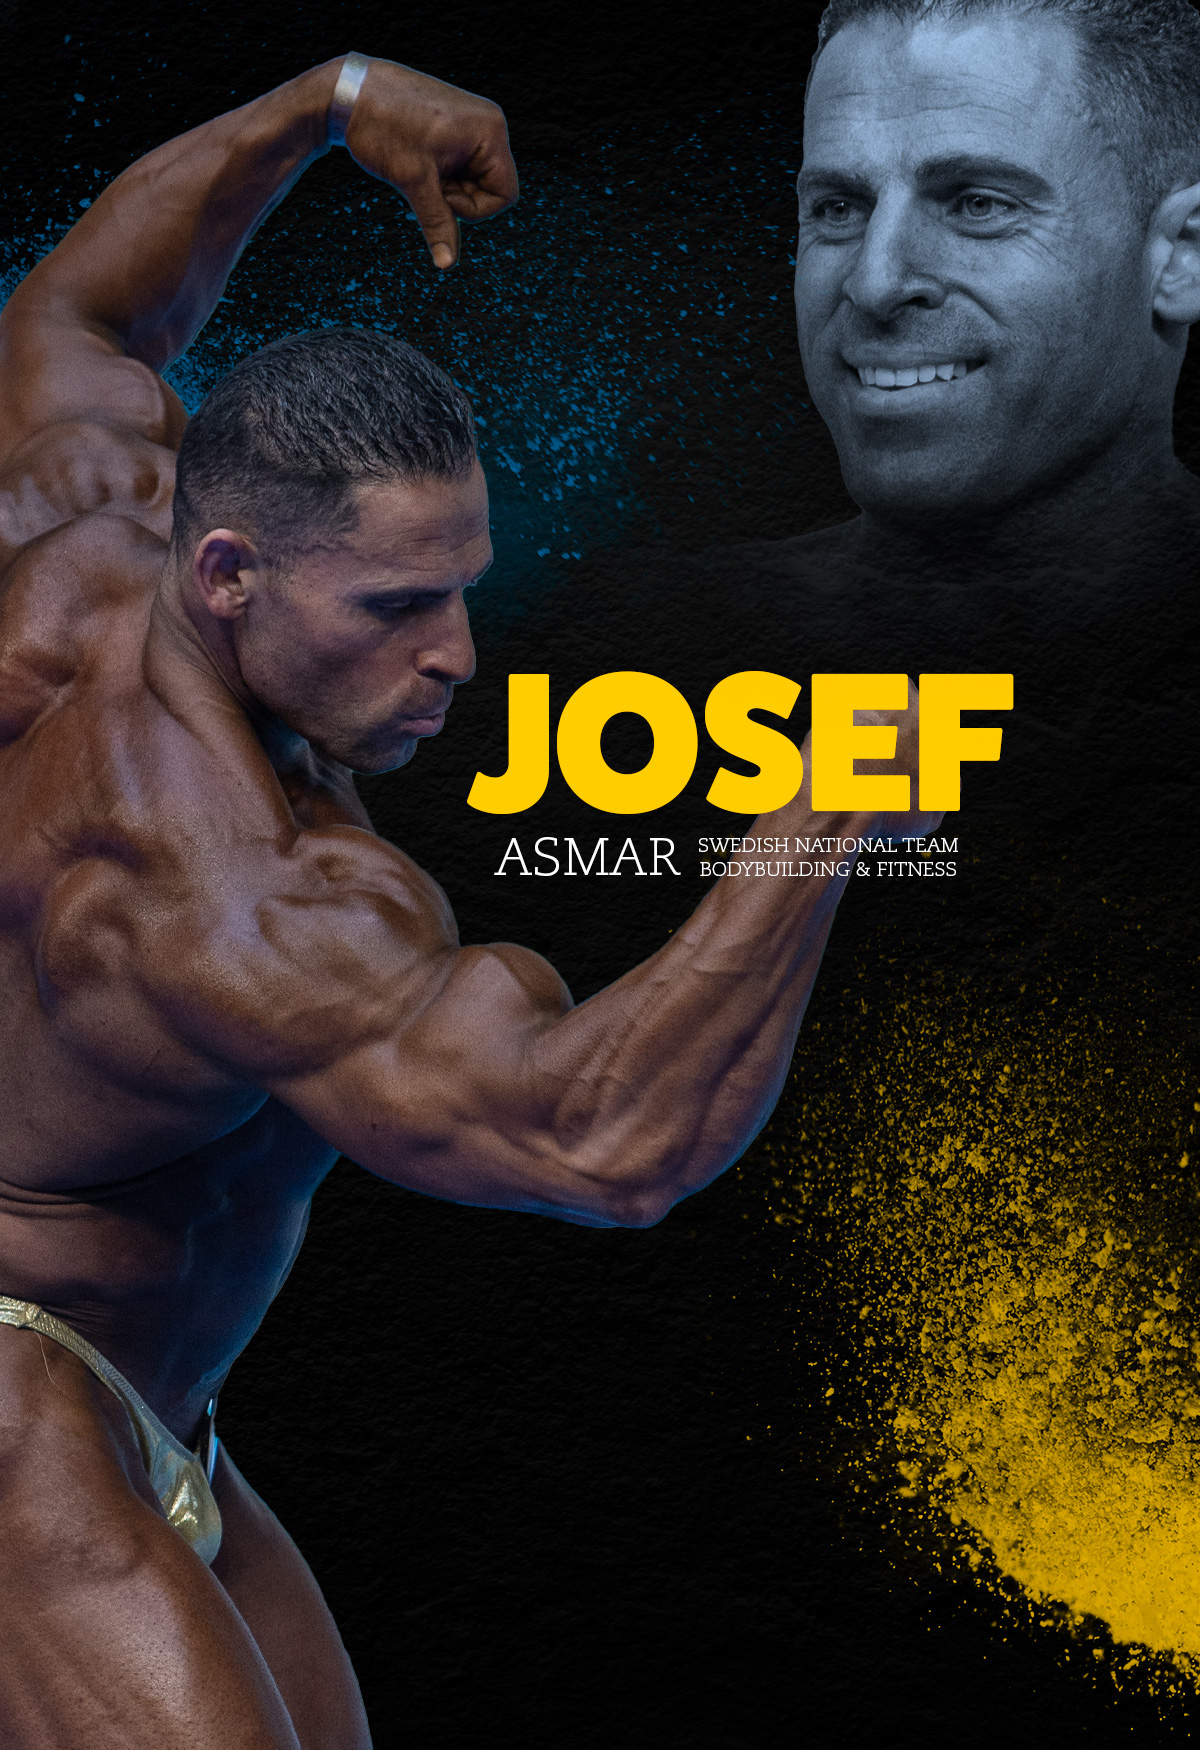 Josef Asmar